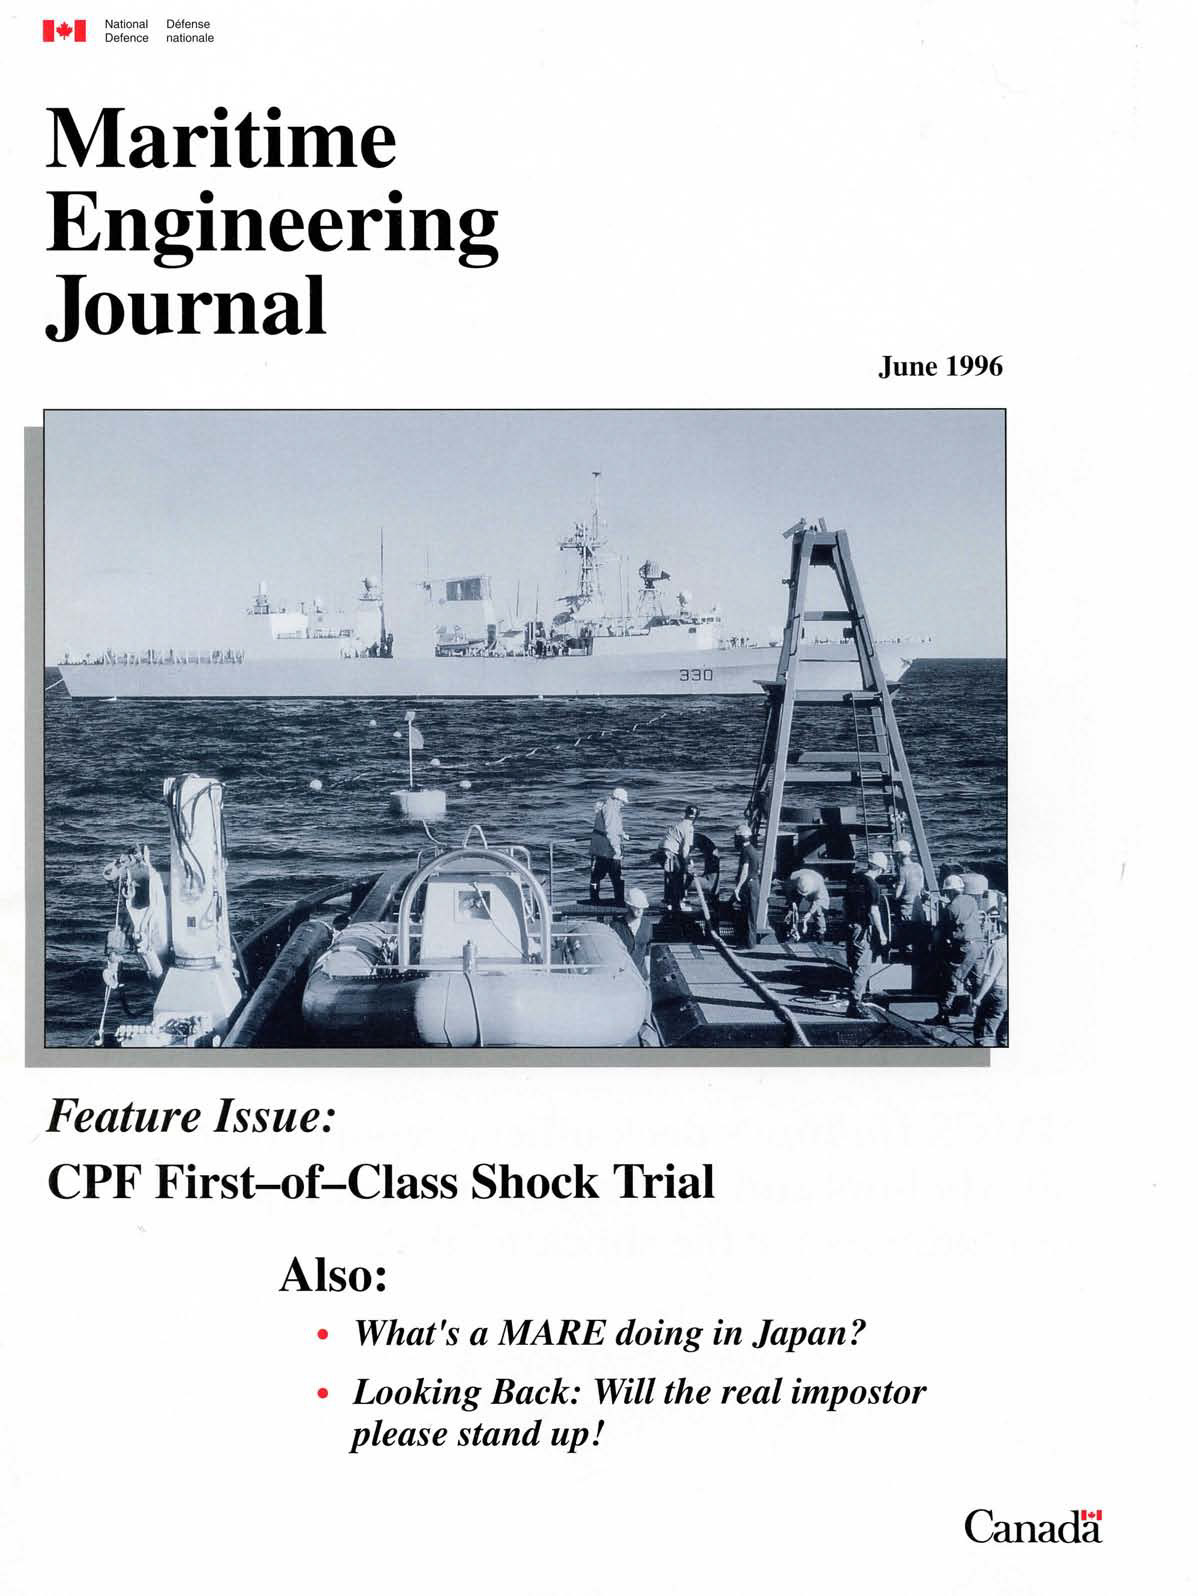 Halifax Class Frigate Whole ship Shock Trial